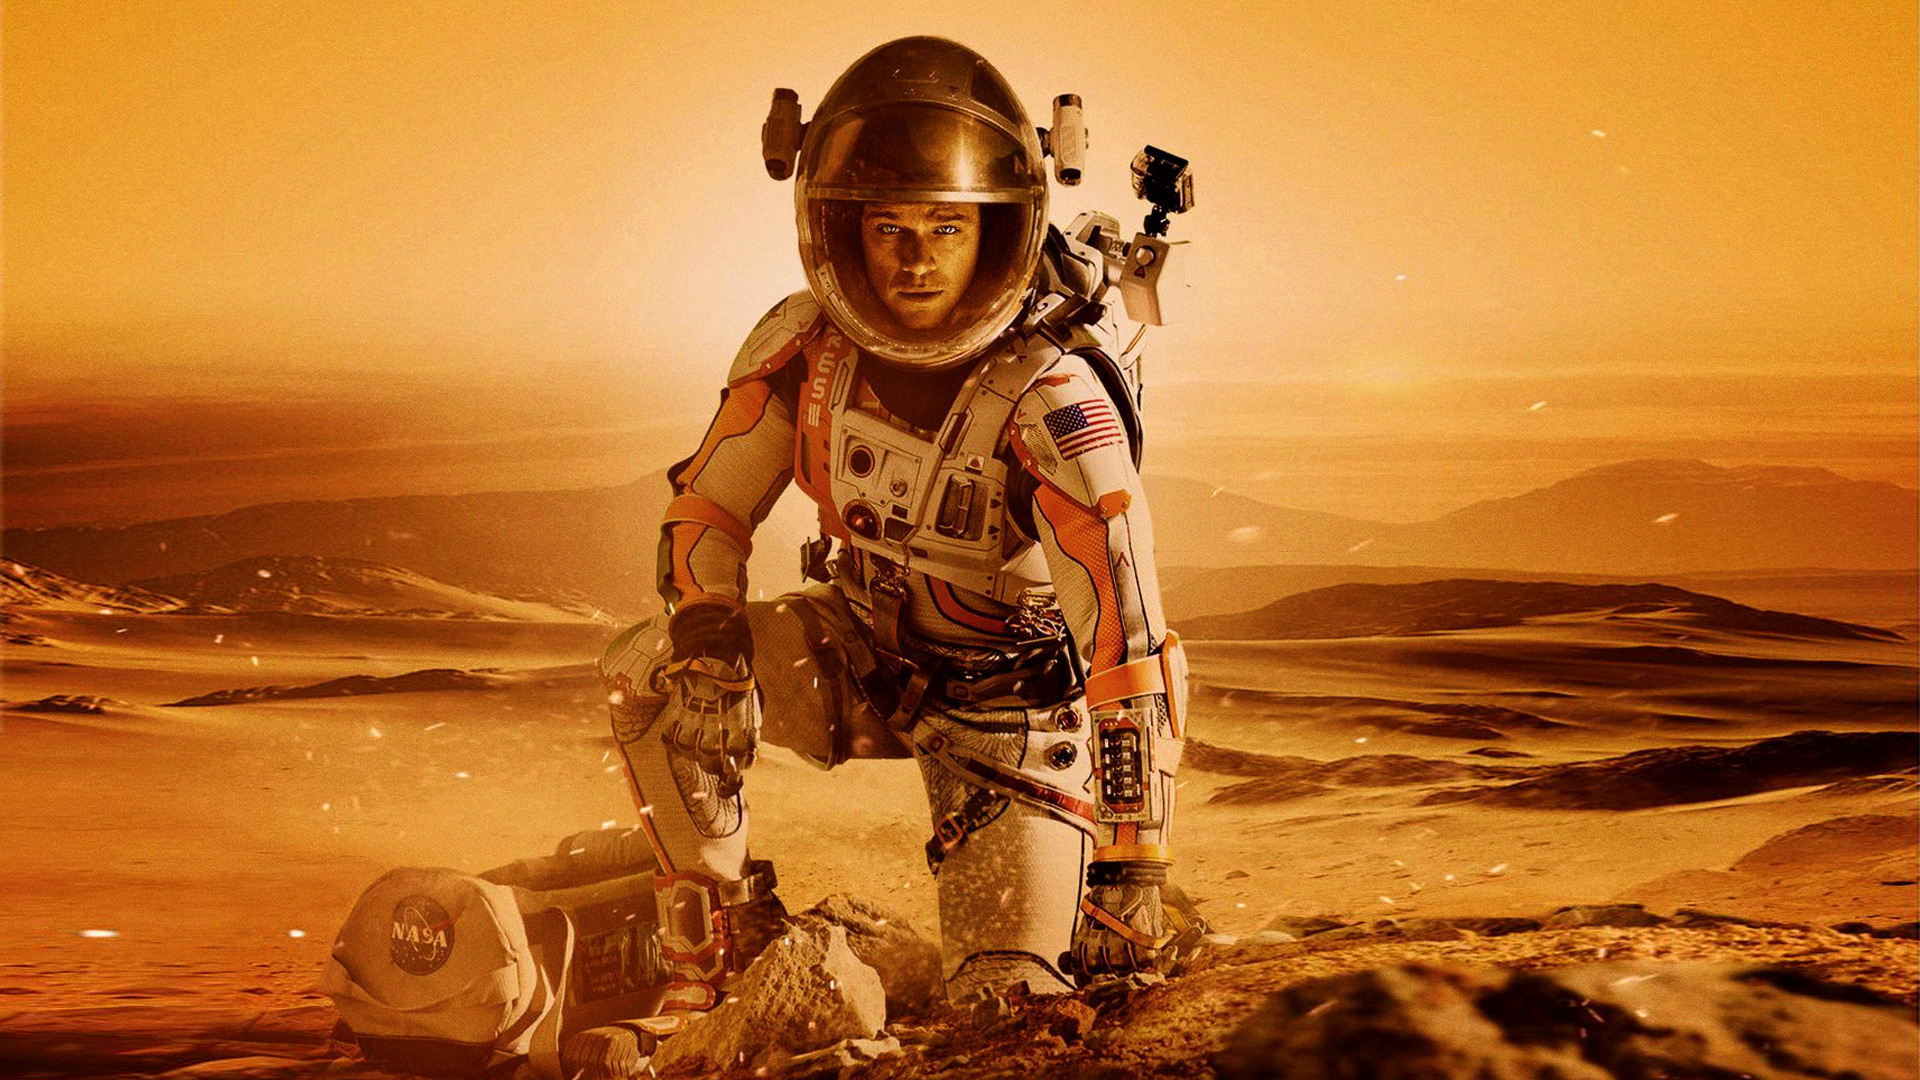 Matt Damon, The Martian HD wallpaper, Astronaut on Mars, Sci-fi adventure, 1920x1080 Full HD Desktop